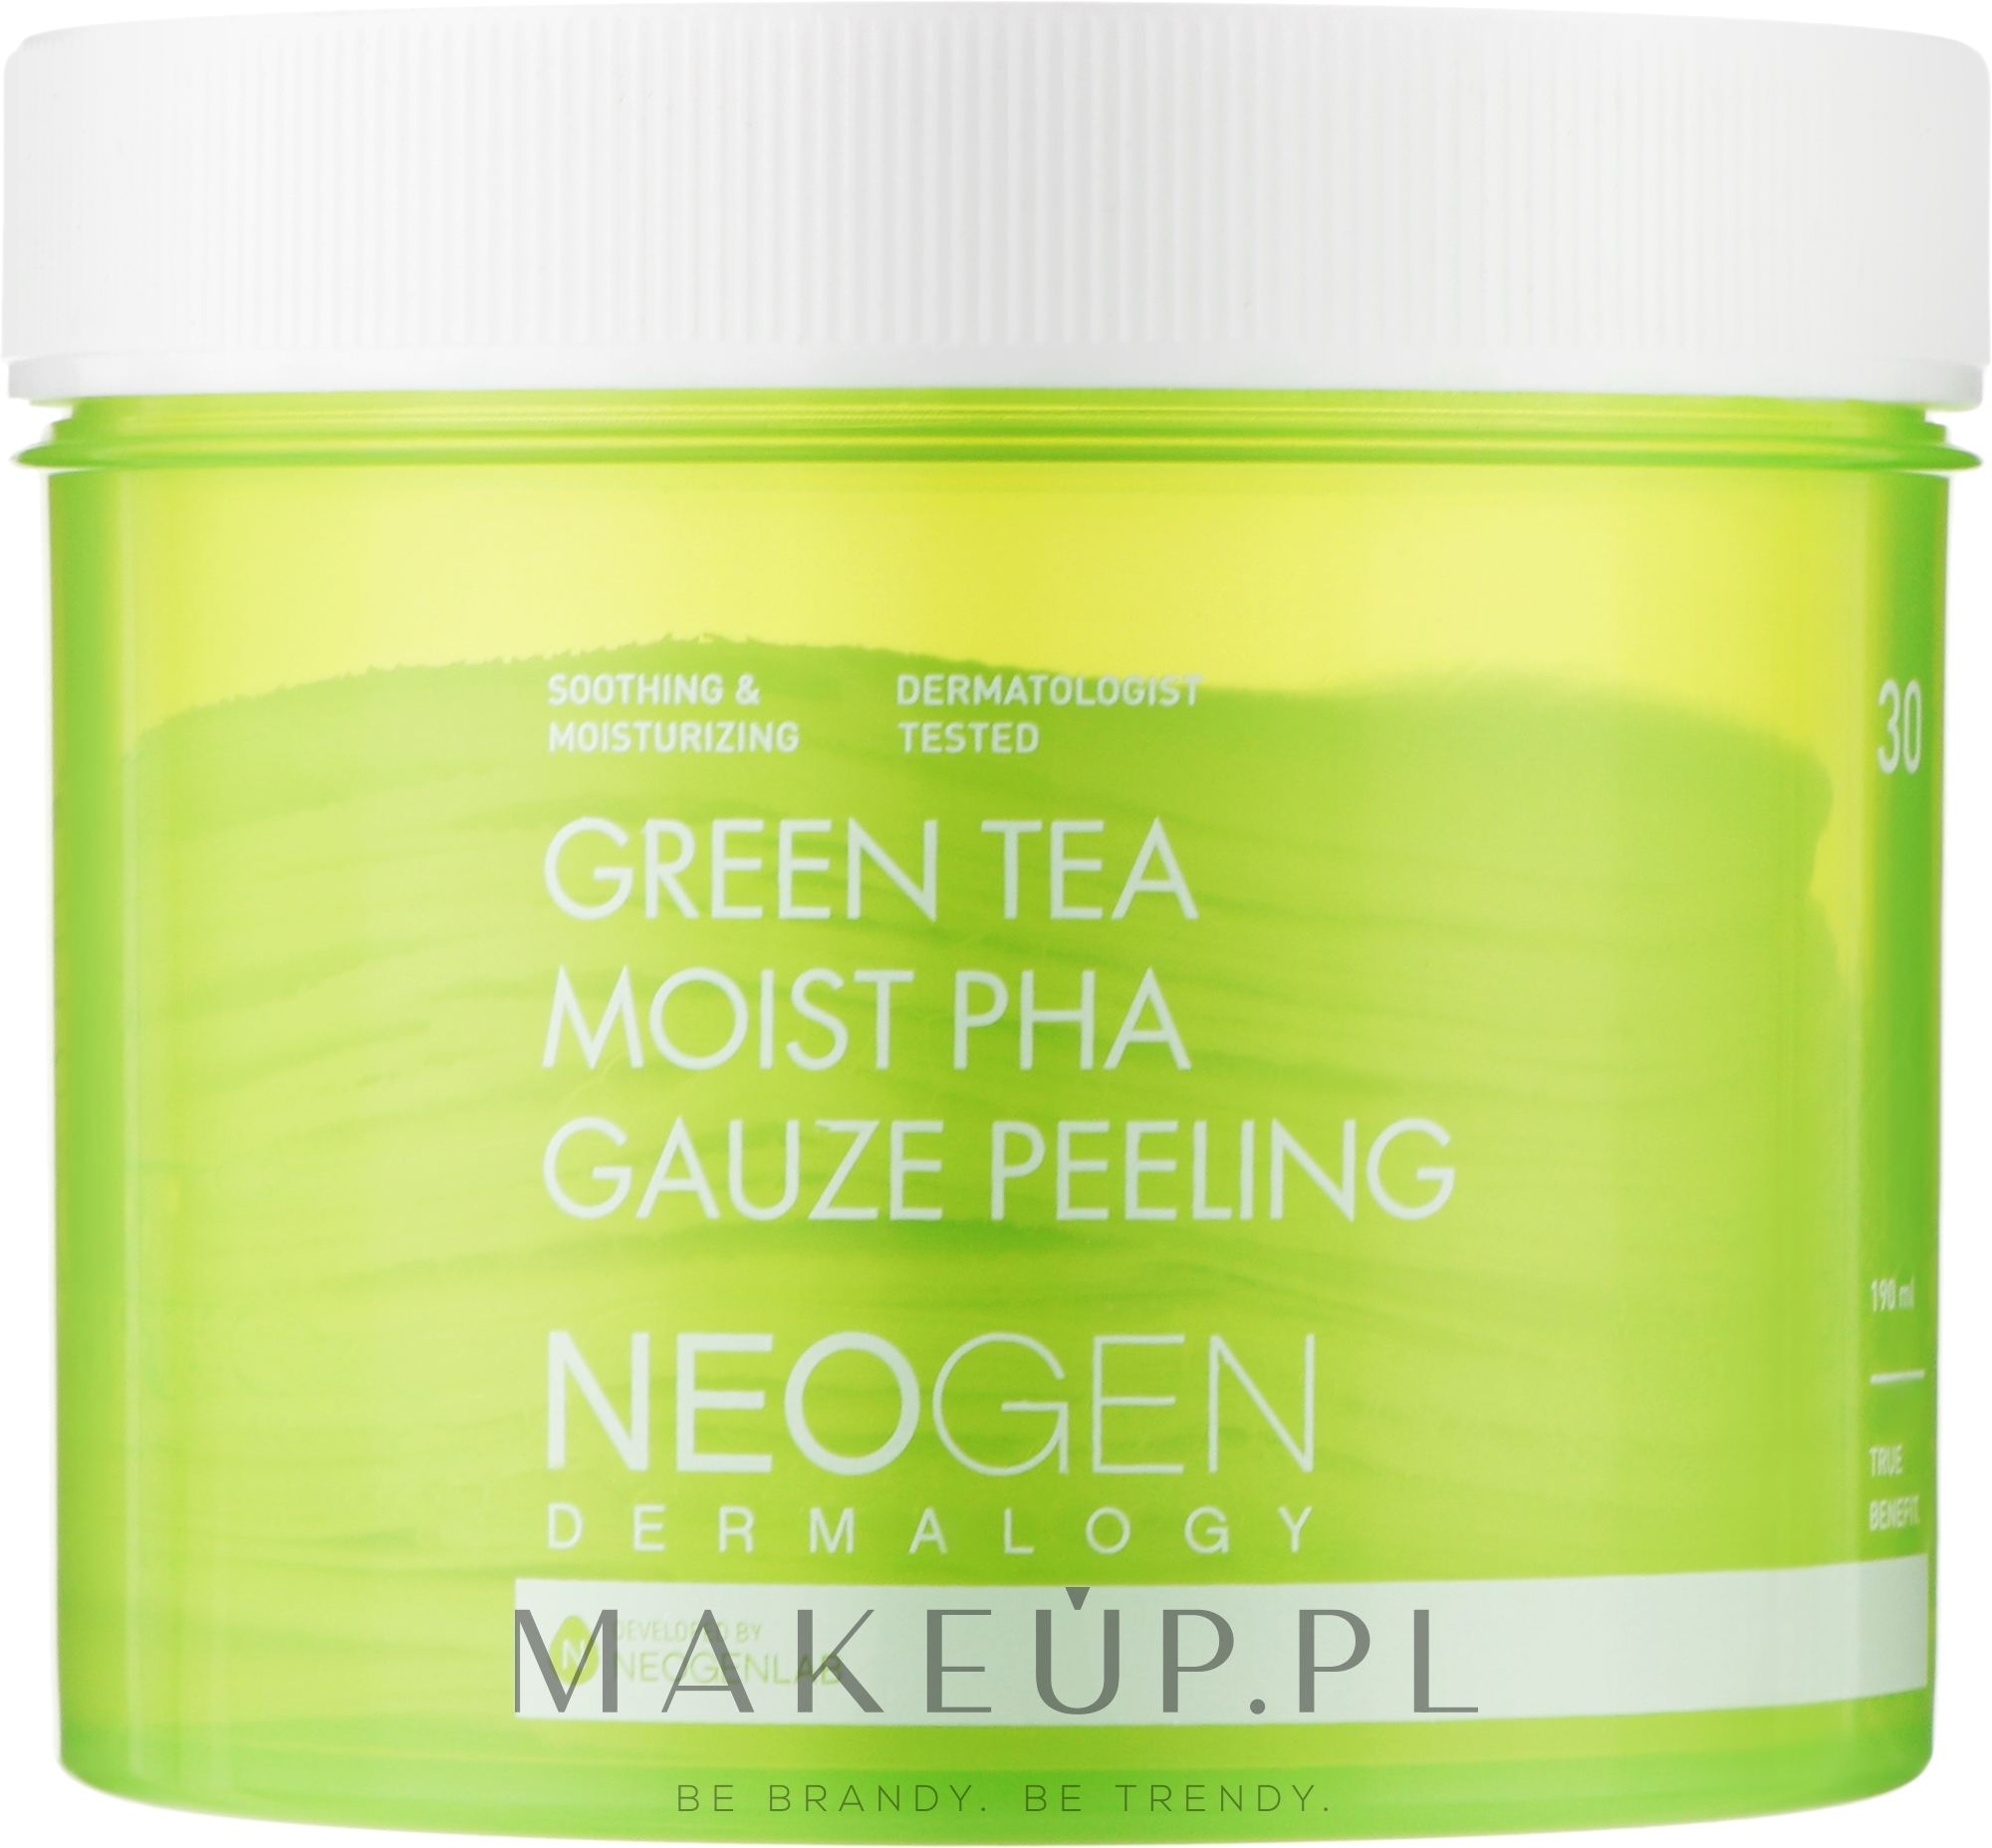 Płatki peelingujące z ekstraktem z zielonej herbaty - Neogen Dermalogy Green Tea Moist Pha Gauze Peeling — Zdjęcie 30 szt.